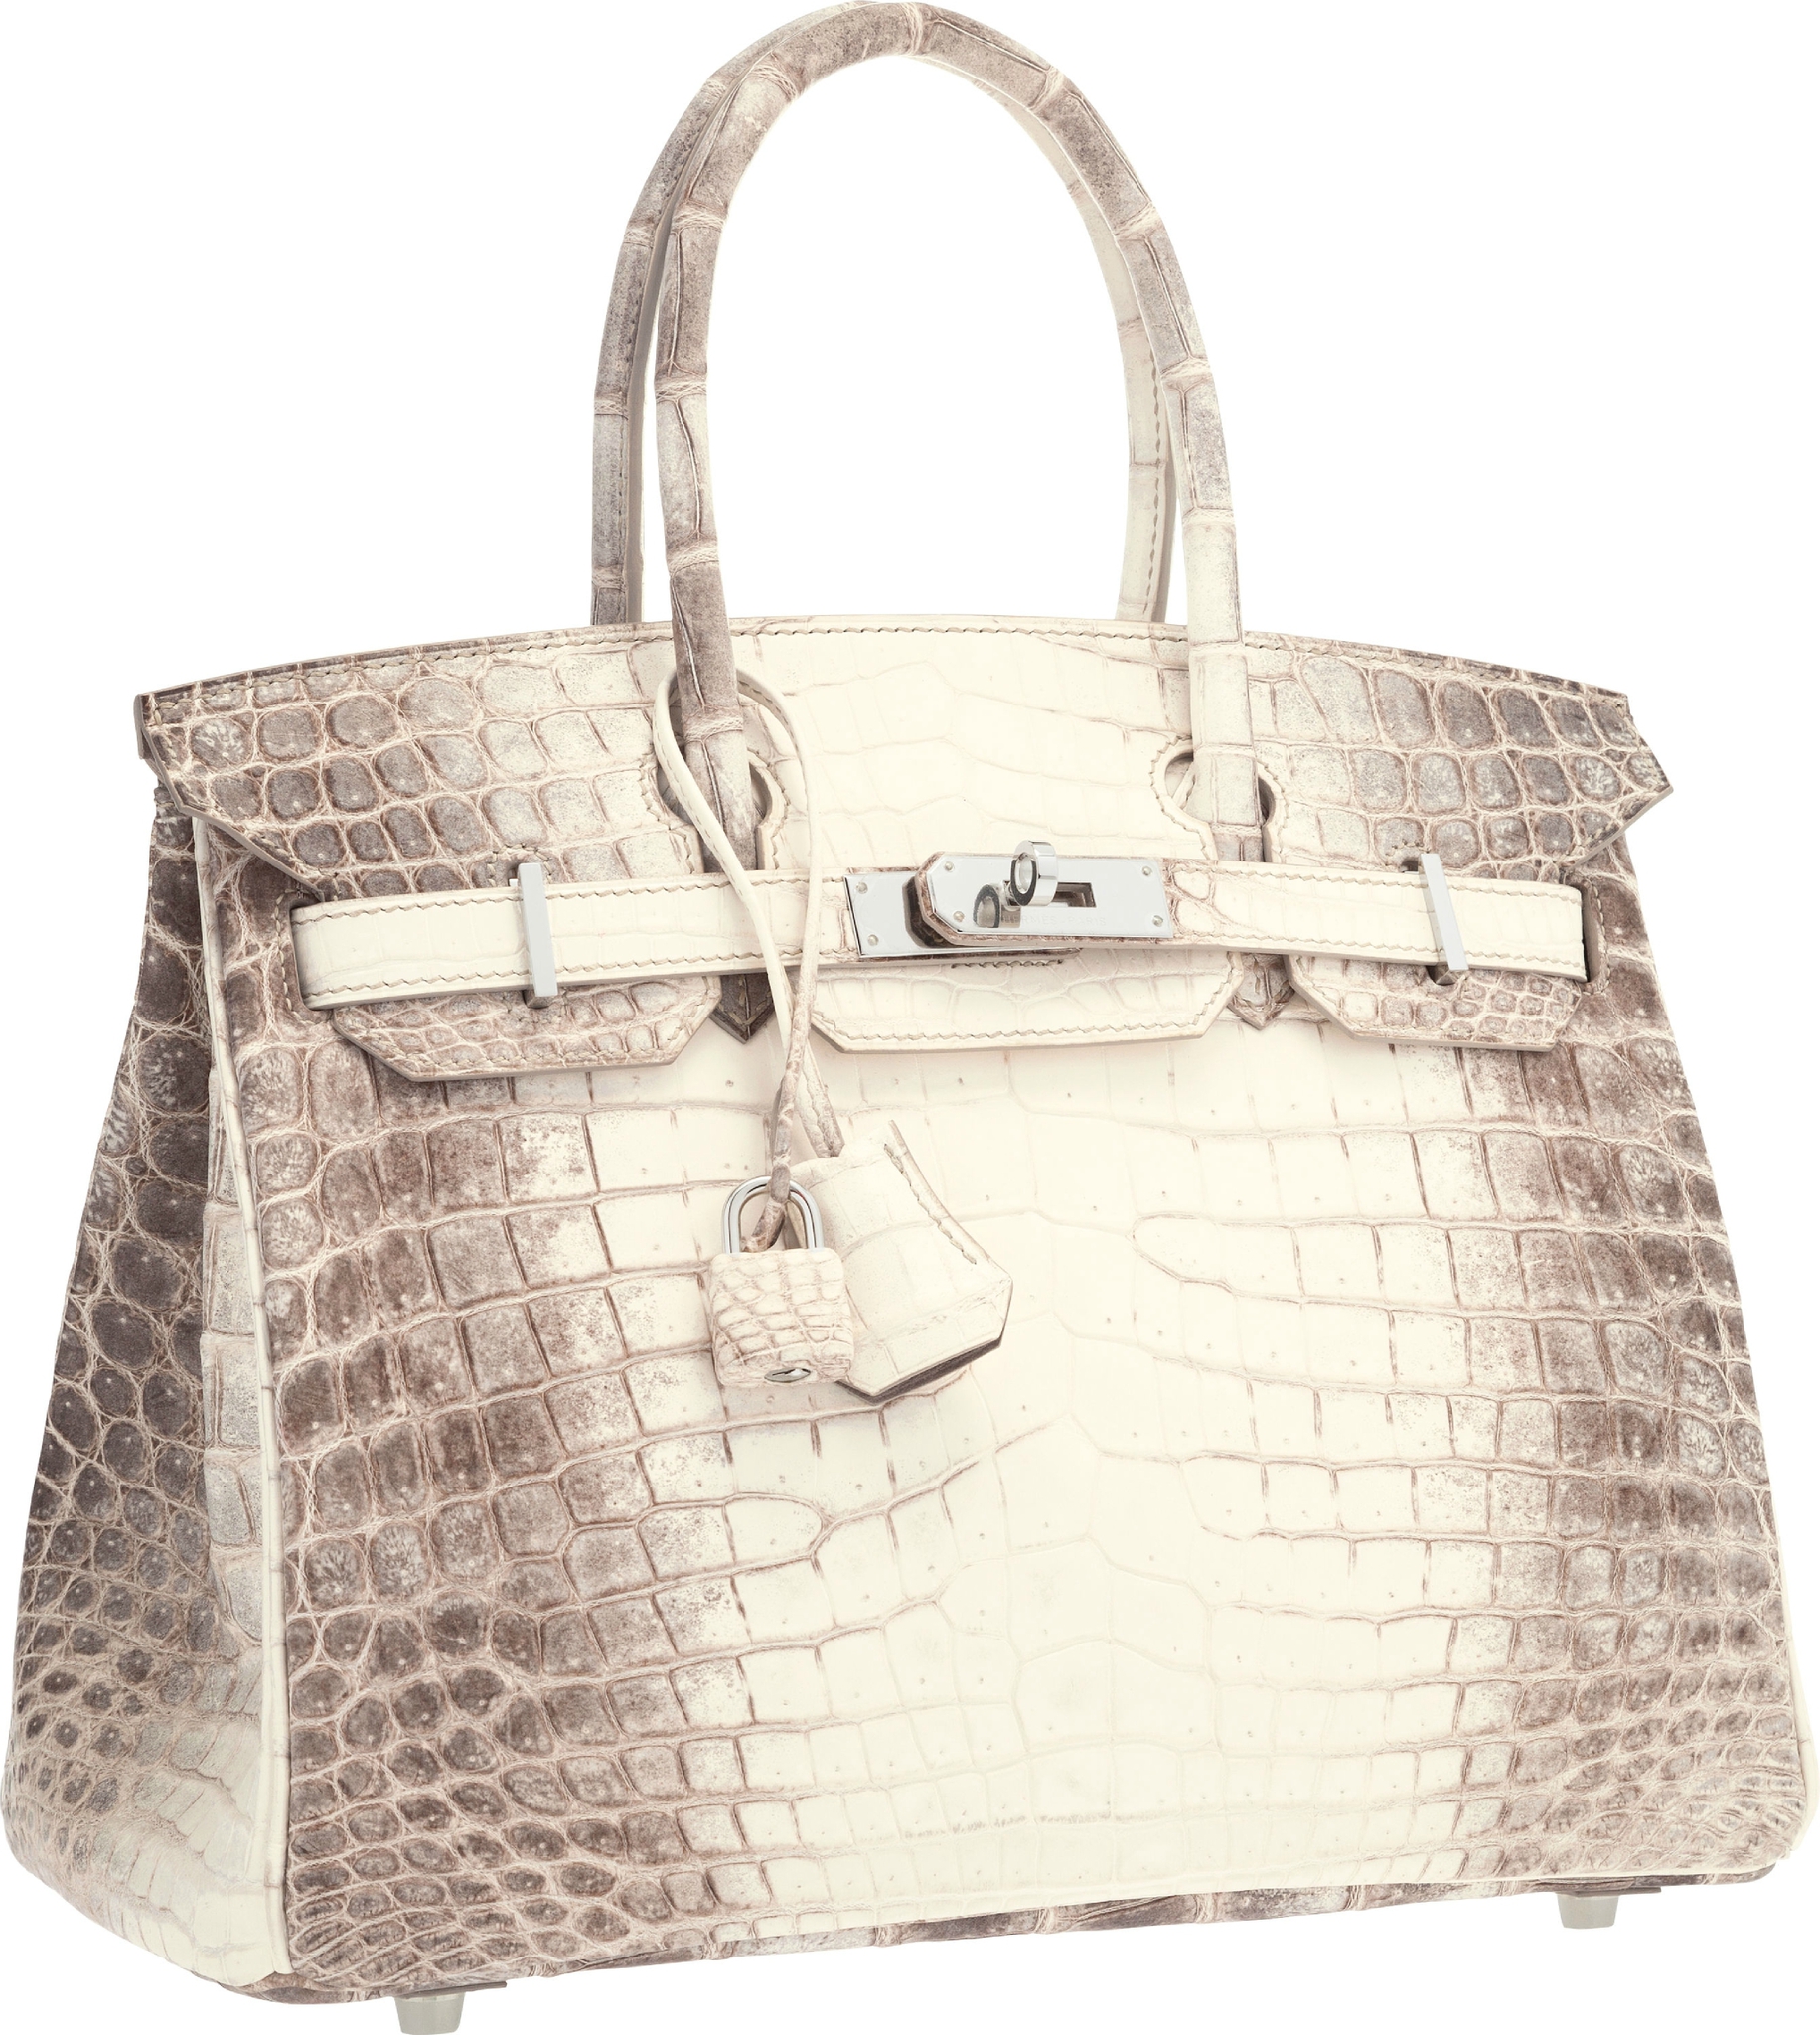 The Most Expensive Hermes Birkin Bag | IQS Executive